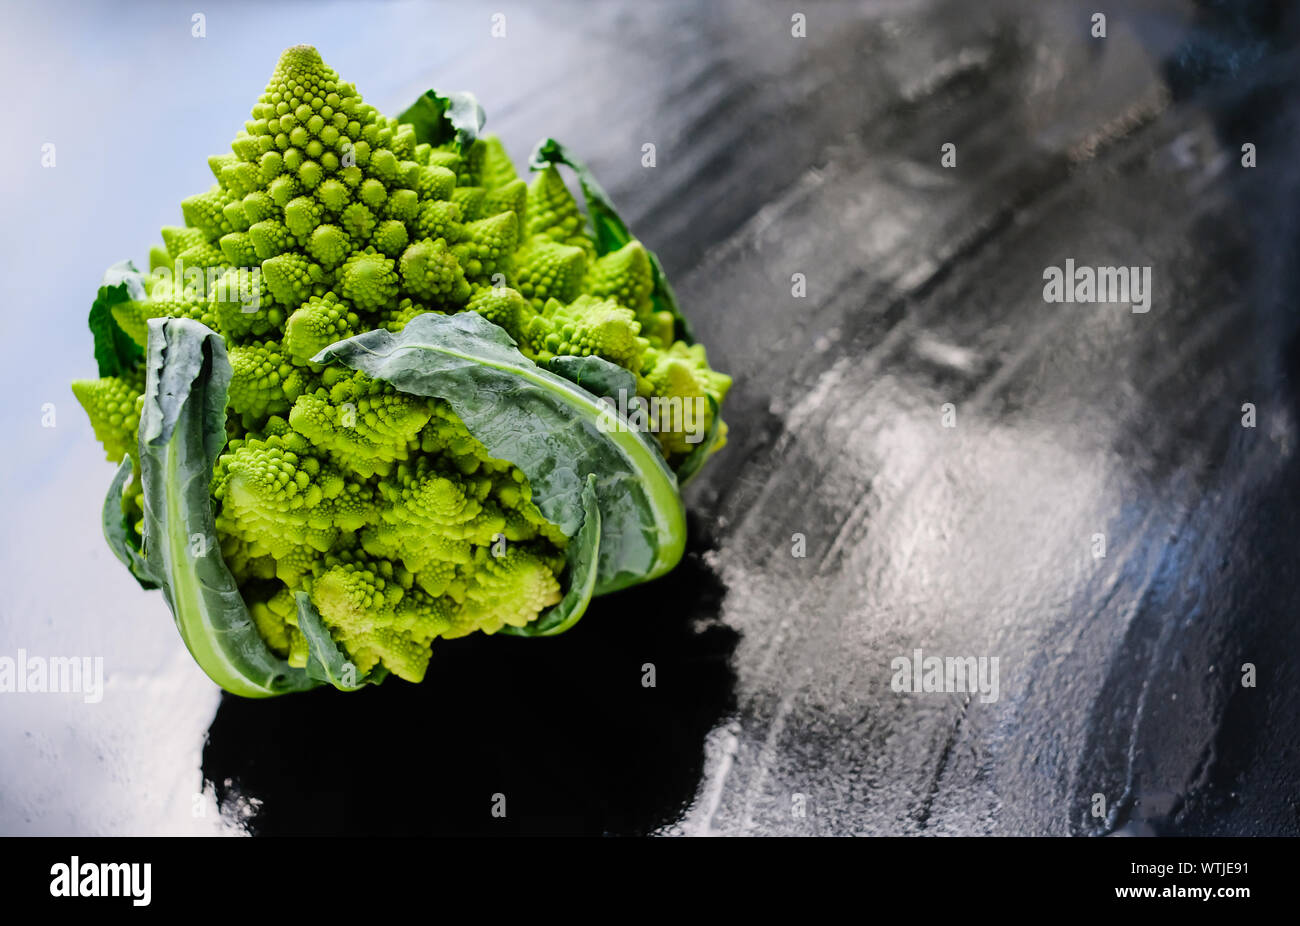 Increíble brócoli romanesco verde fresco o coliflor romana sobre fondo húmedo oscuro. Su forma es una aproximación natural de un fractal. Vista de primer plano. Foto de stock